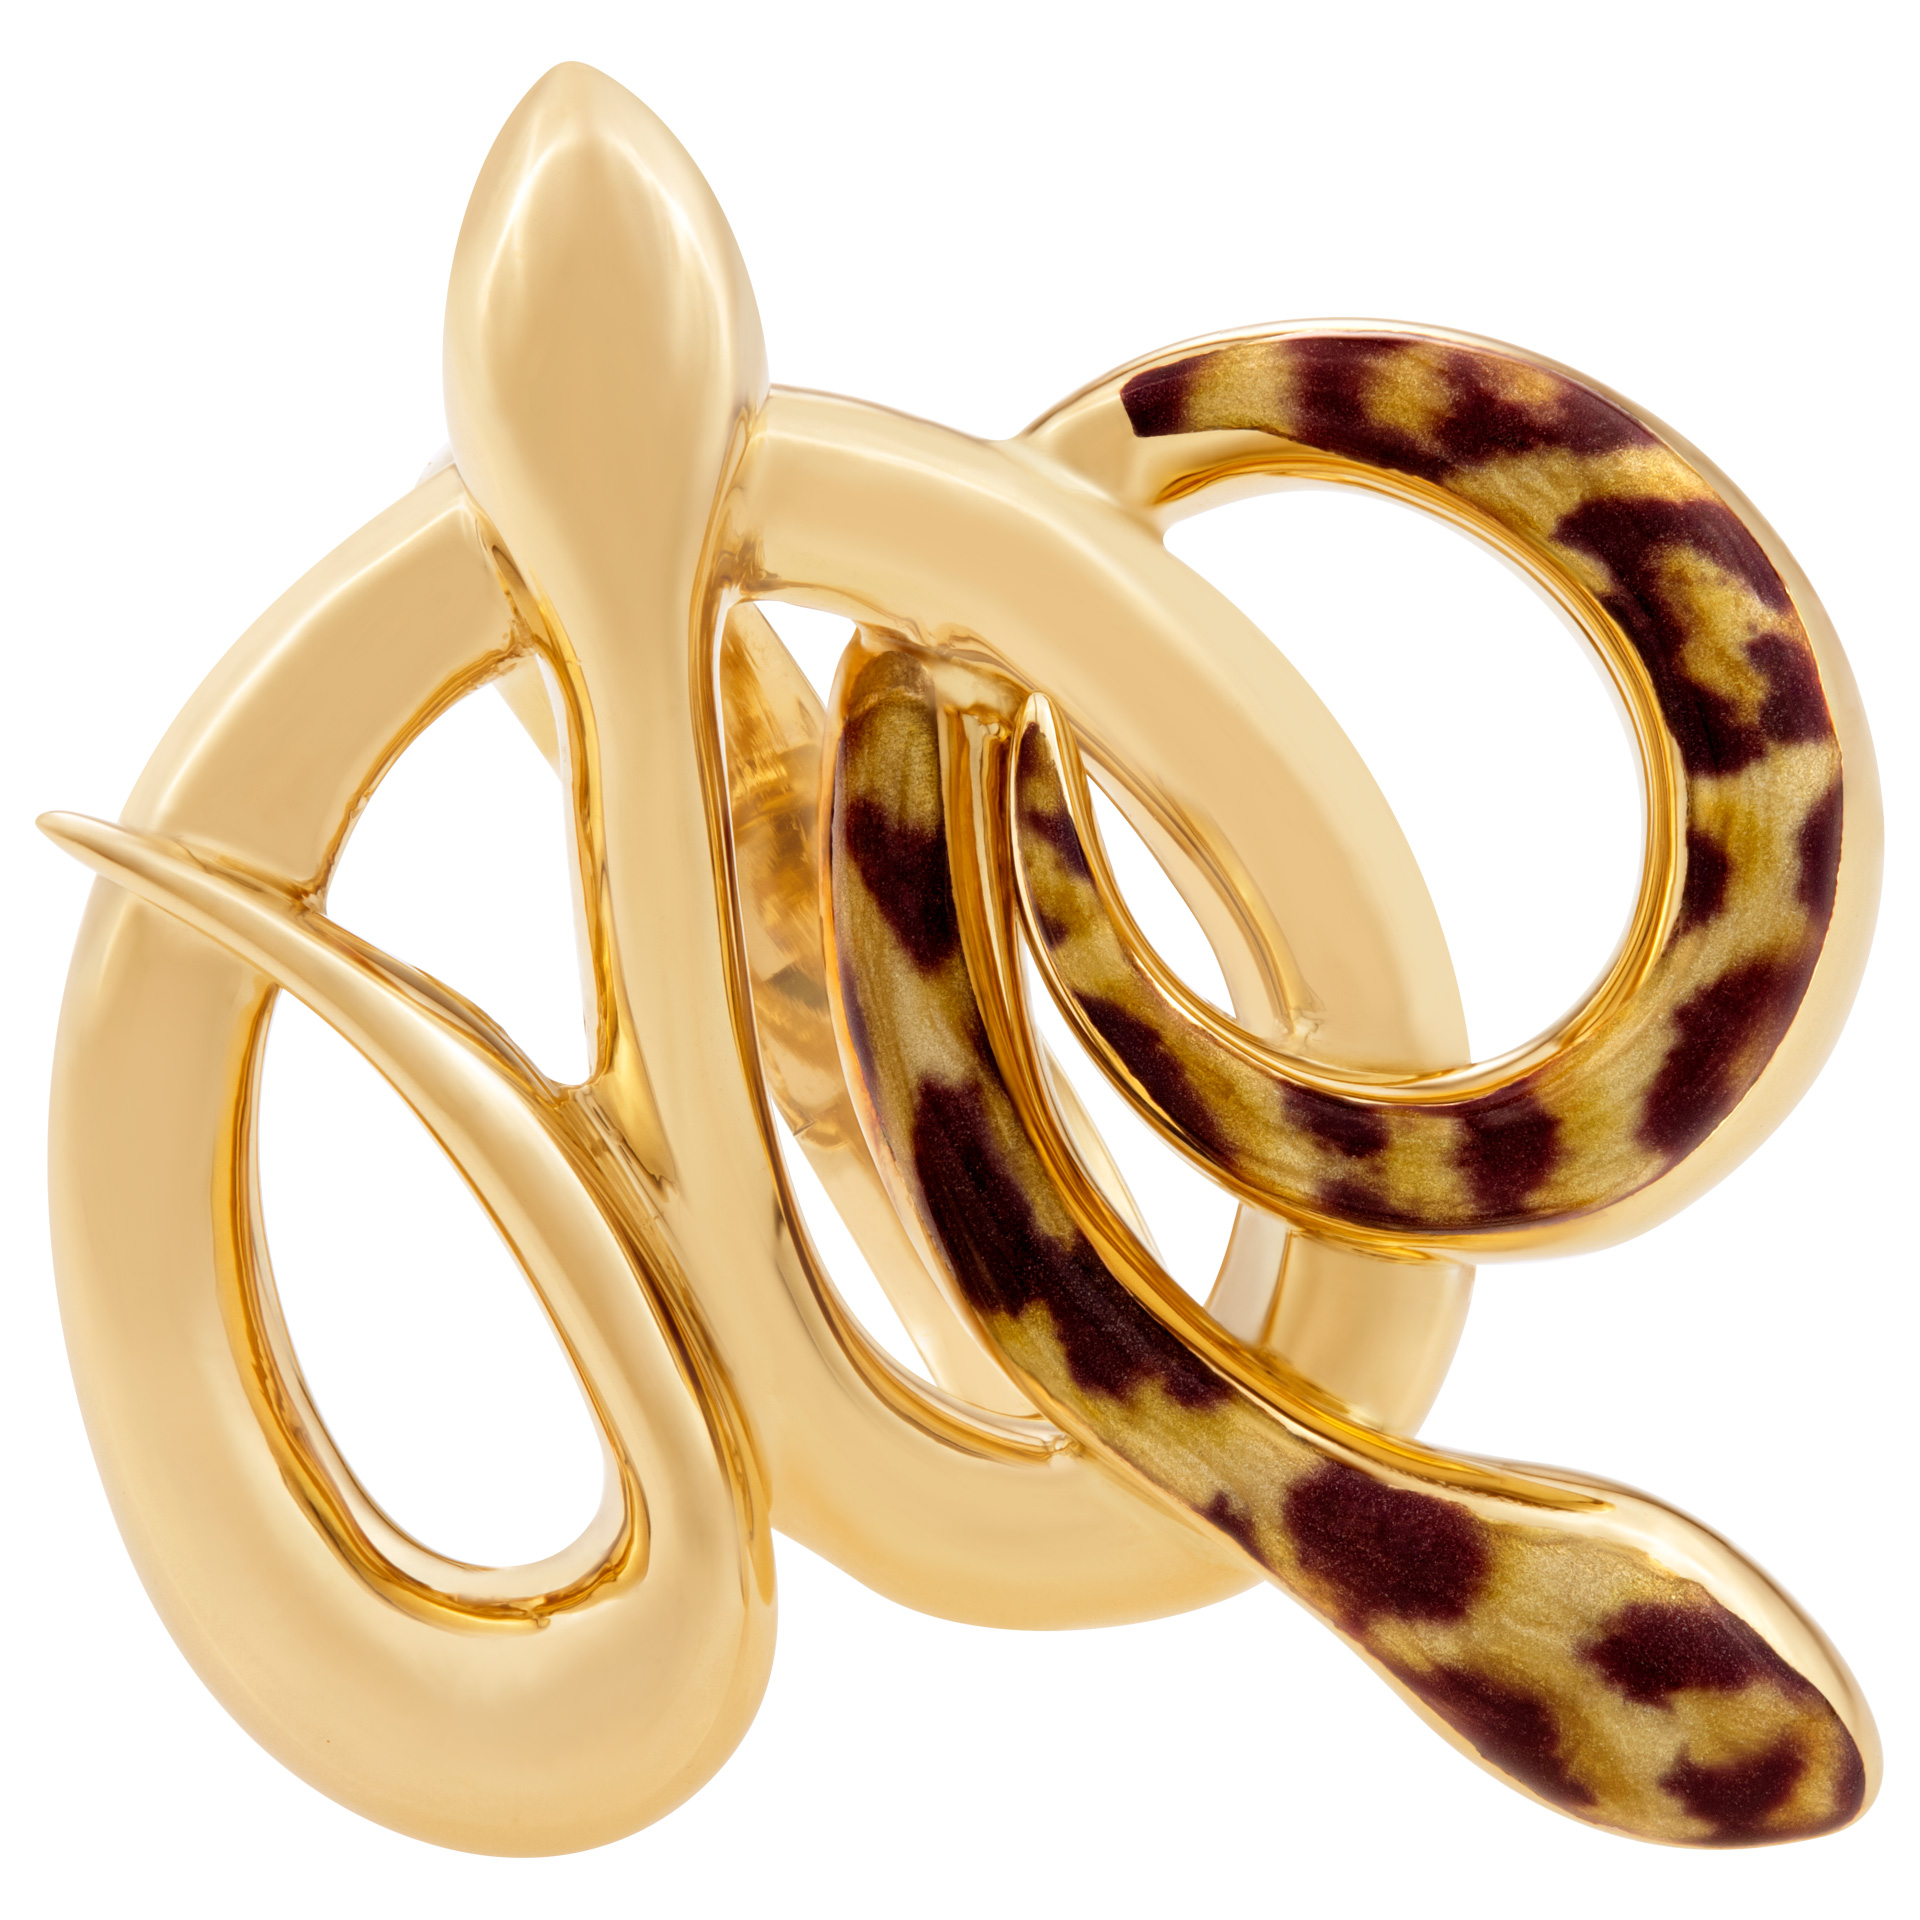 Stylish snake enamel ring in 14k image 1